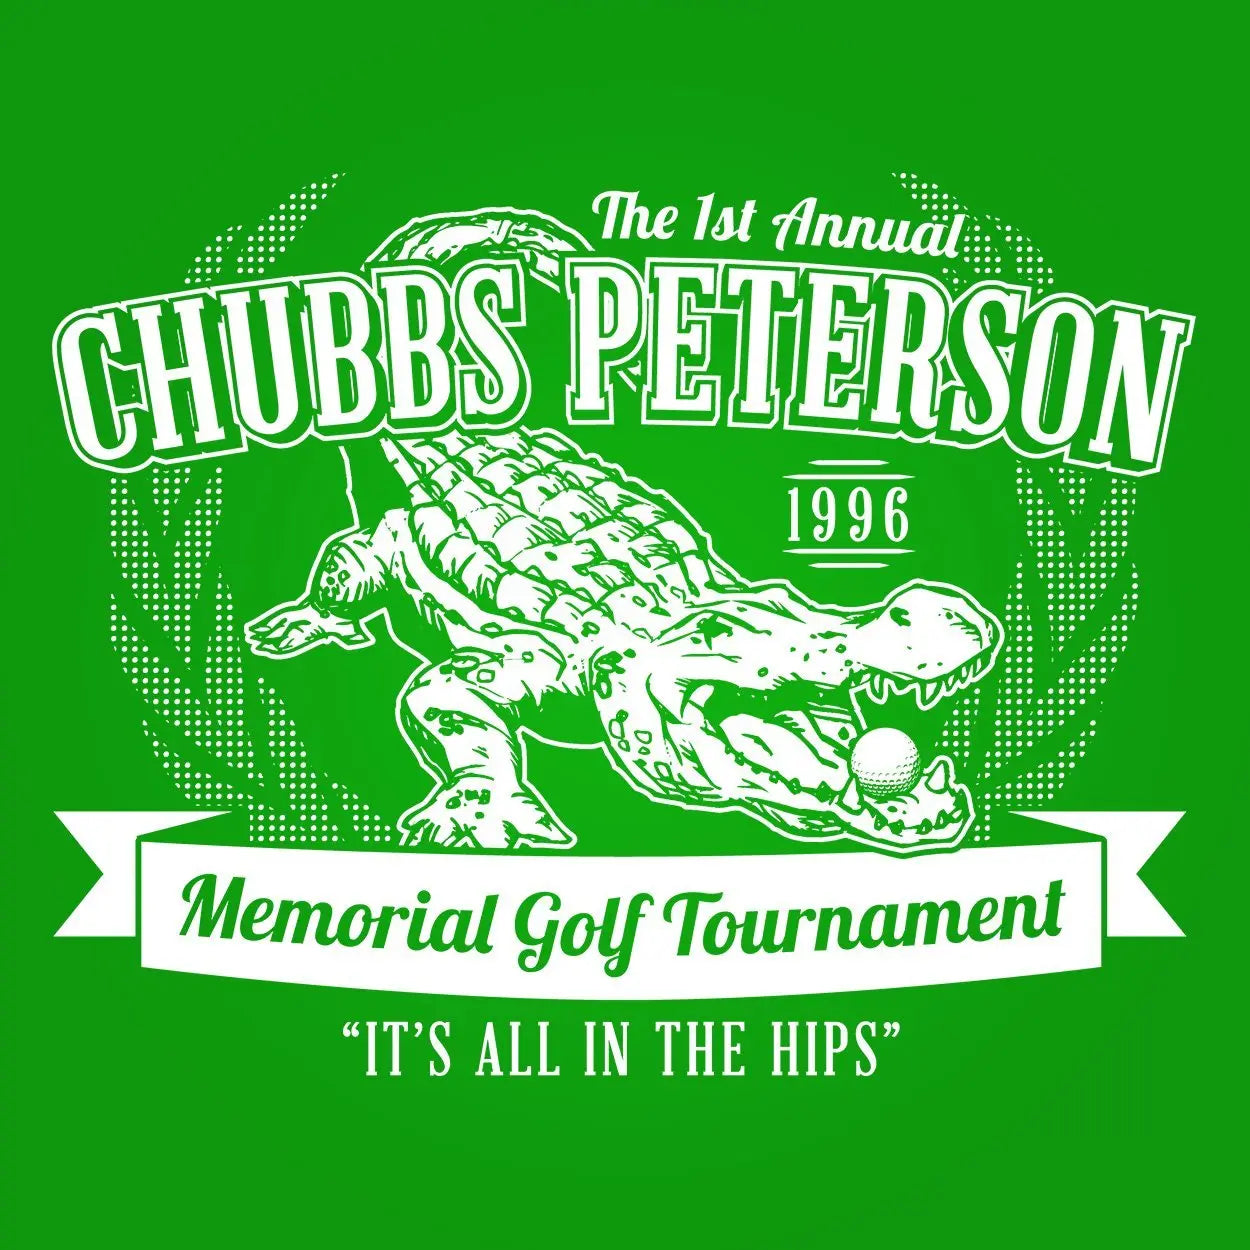 Chubbs Peterson Golf Memorial Tshirt - Donkey Tees